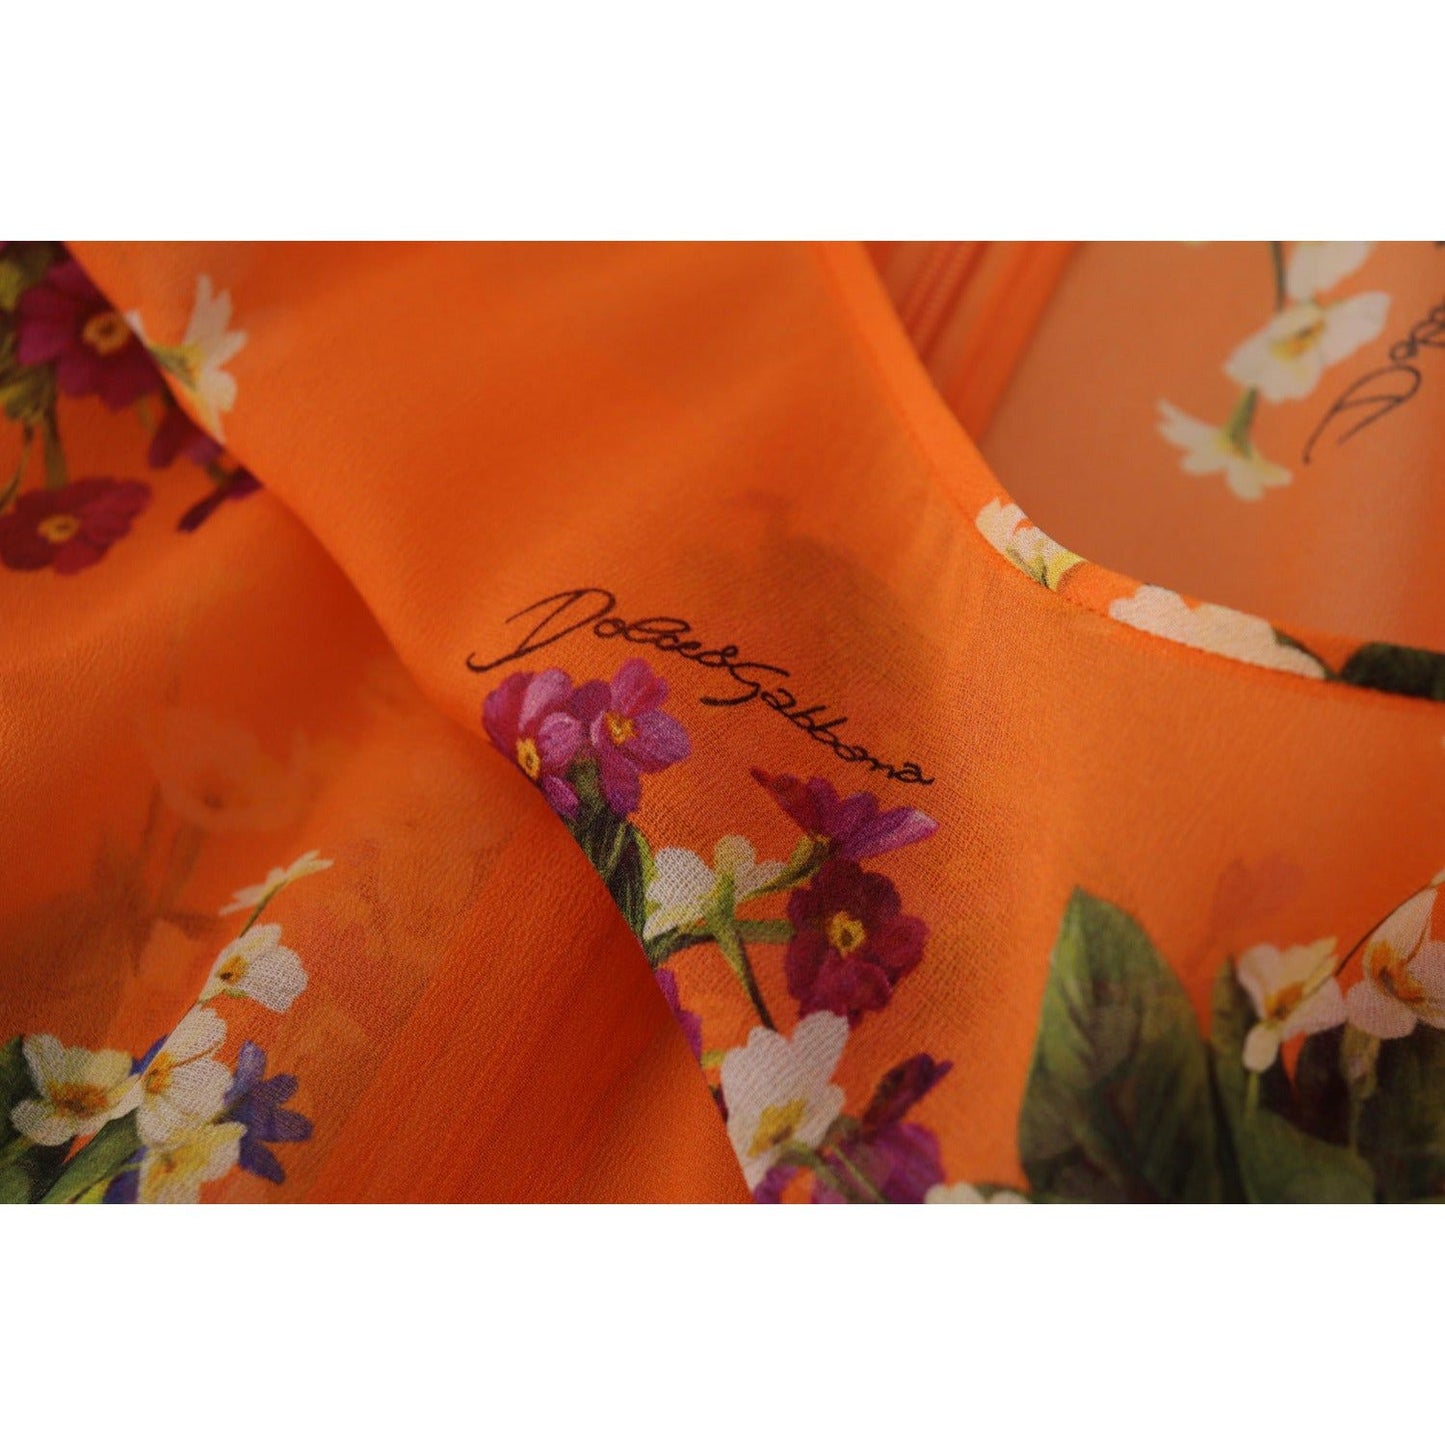 Dolce & Gabbana Elegant Floral Silk Blouse with Back Zipper orange-floral-print-long-sleeve-blouse